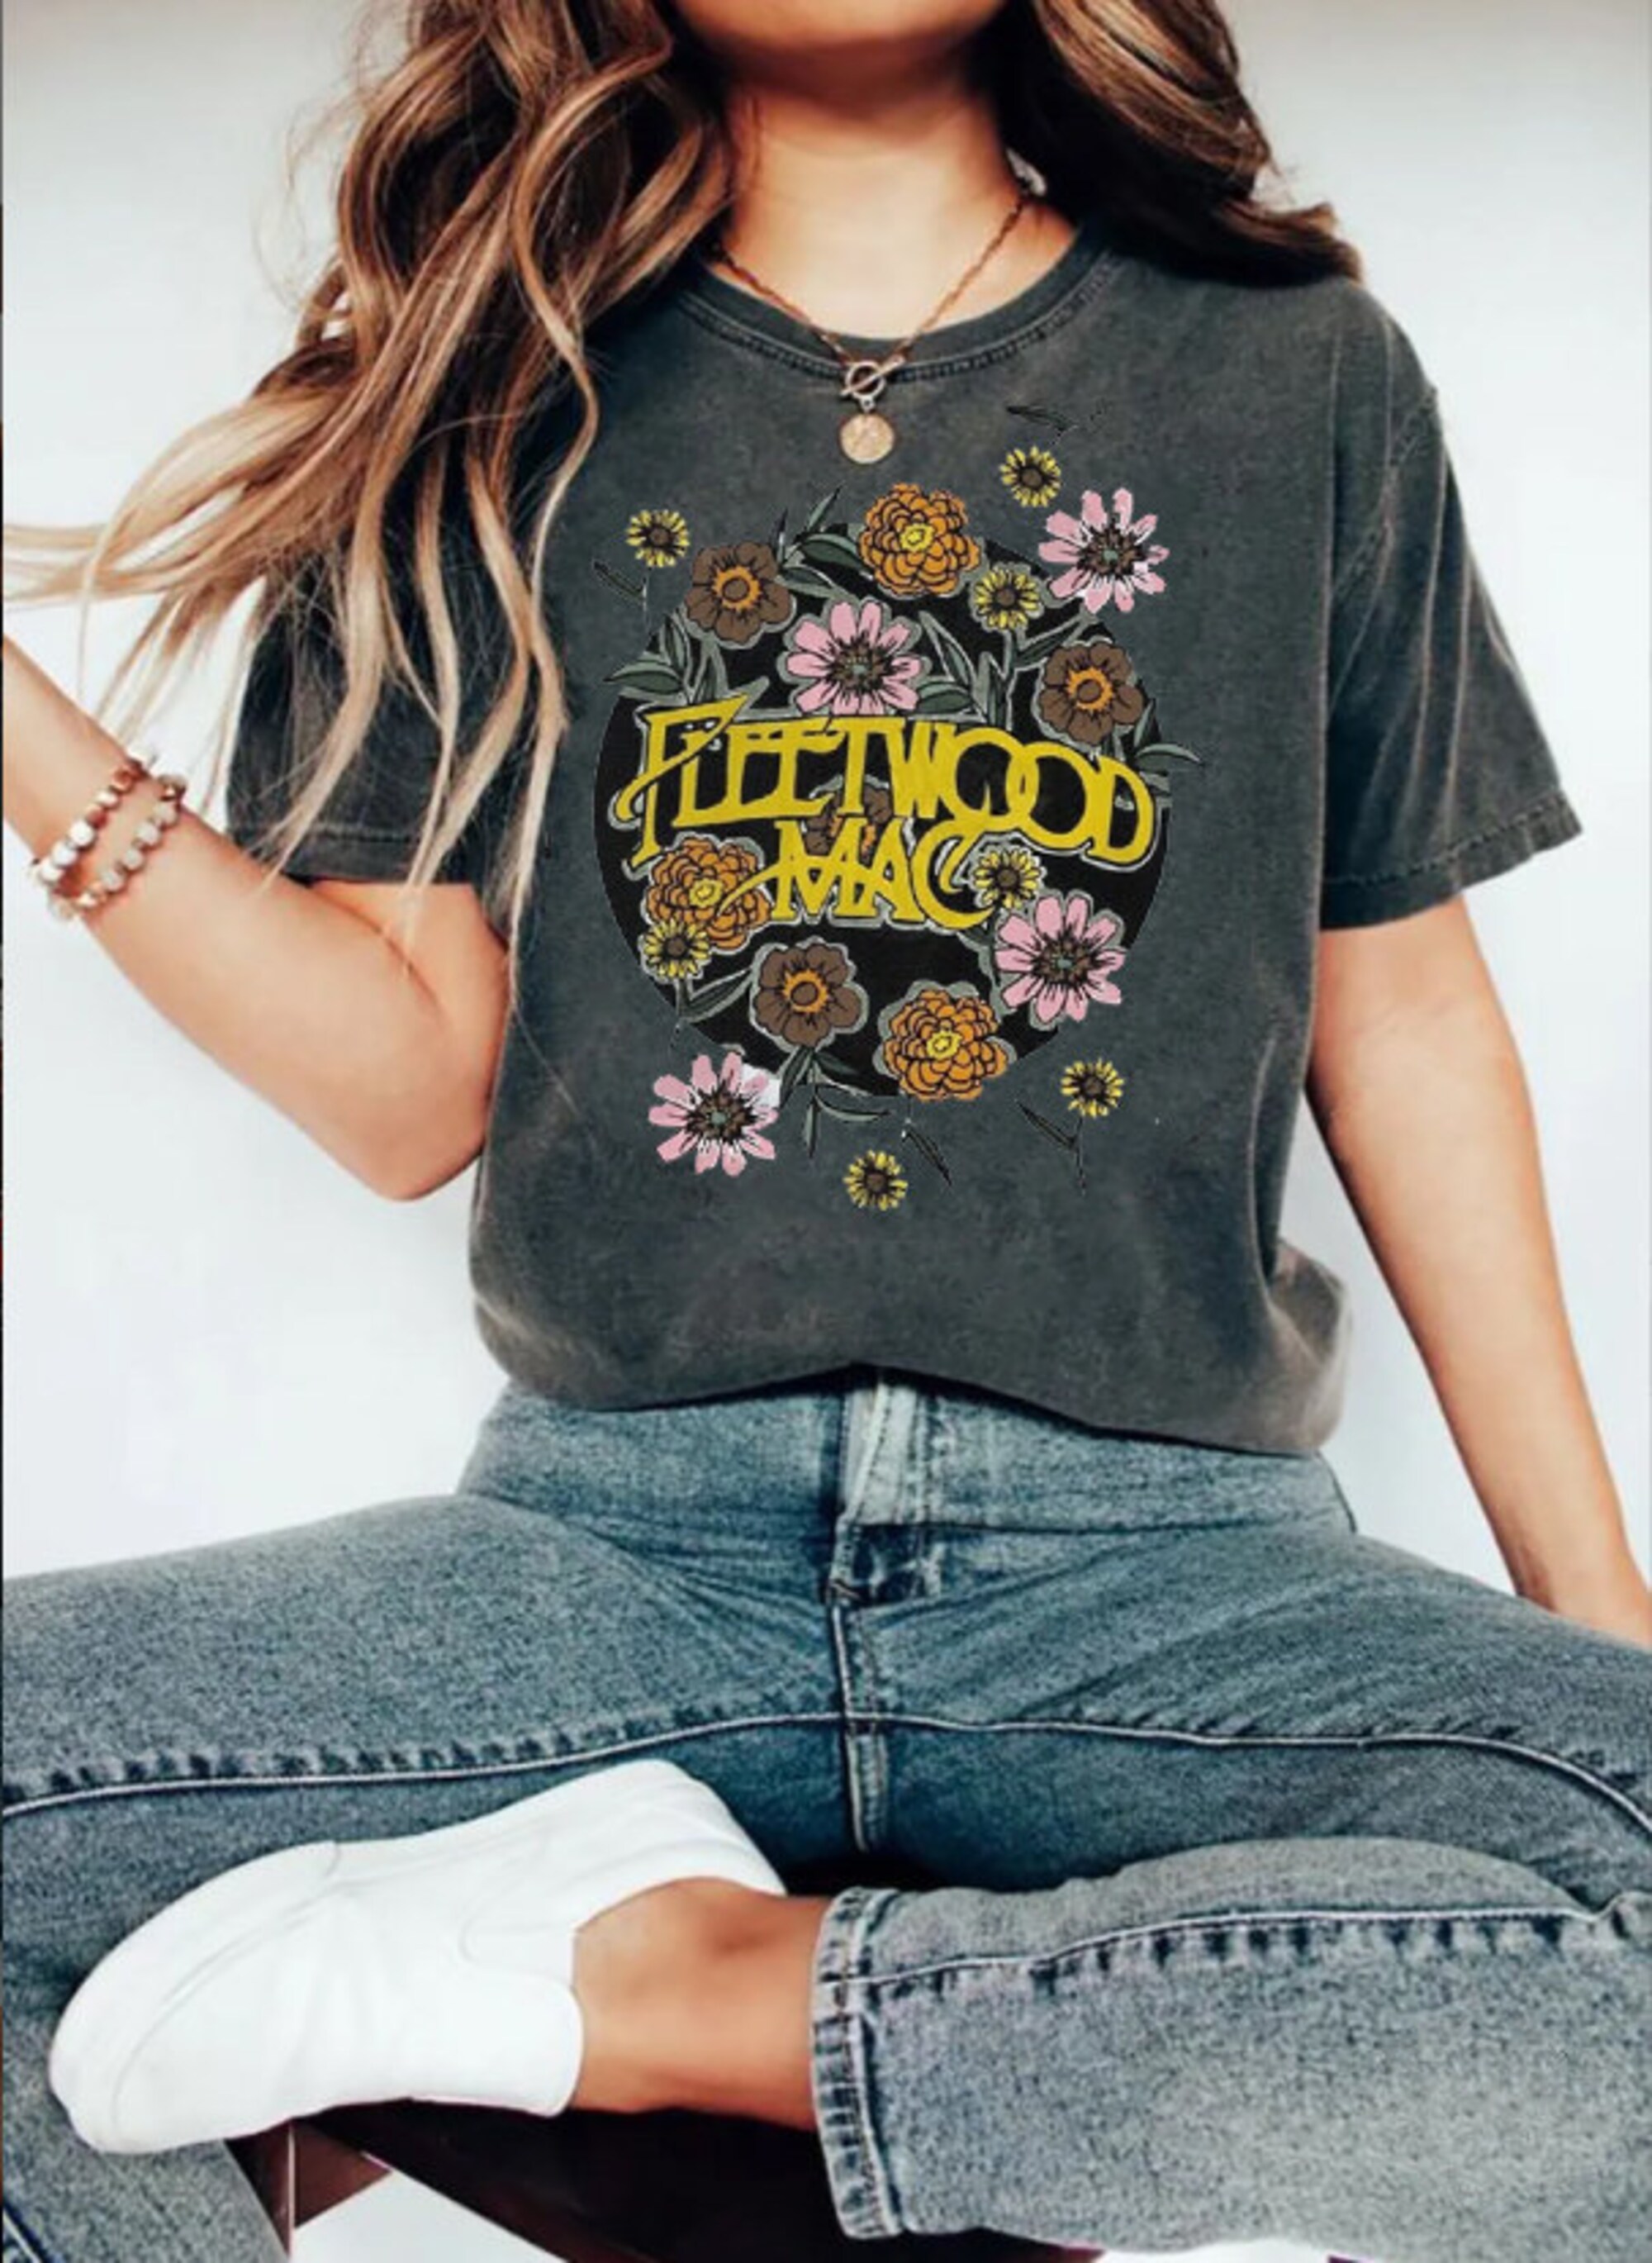 Discover Fleetwood Mac T-shirt, Fleetwood Mac Vintage Flower T-Shirt